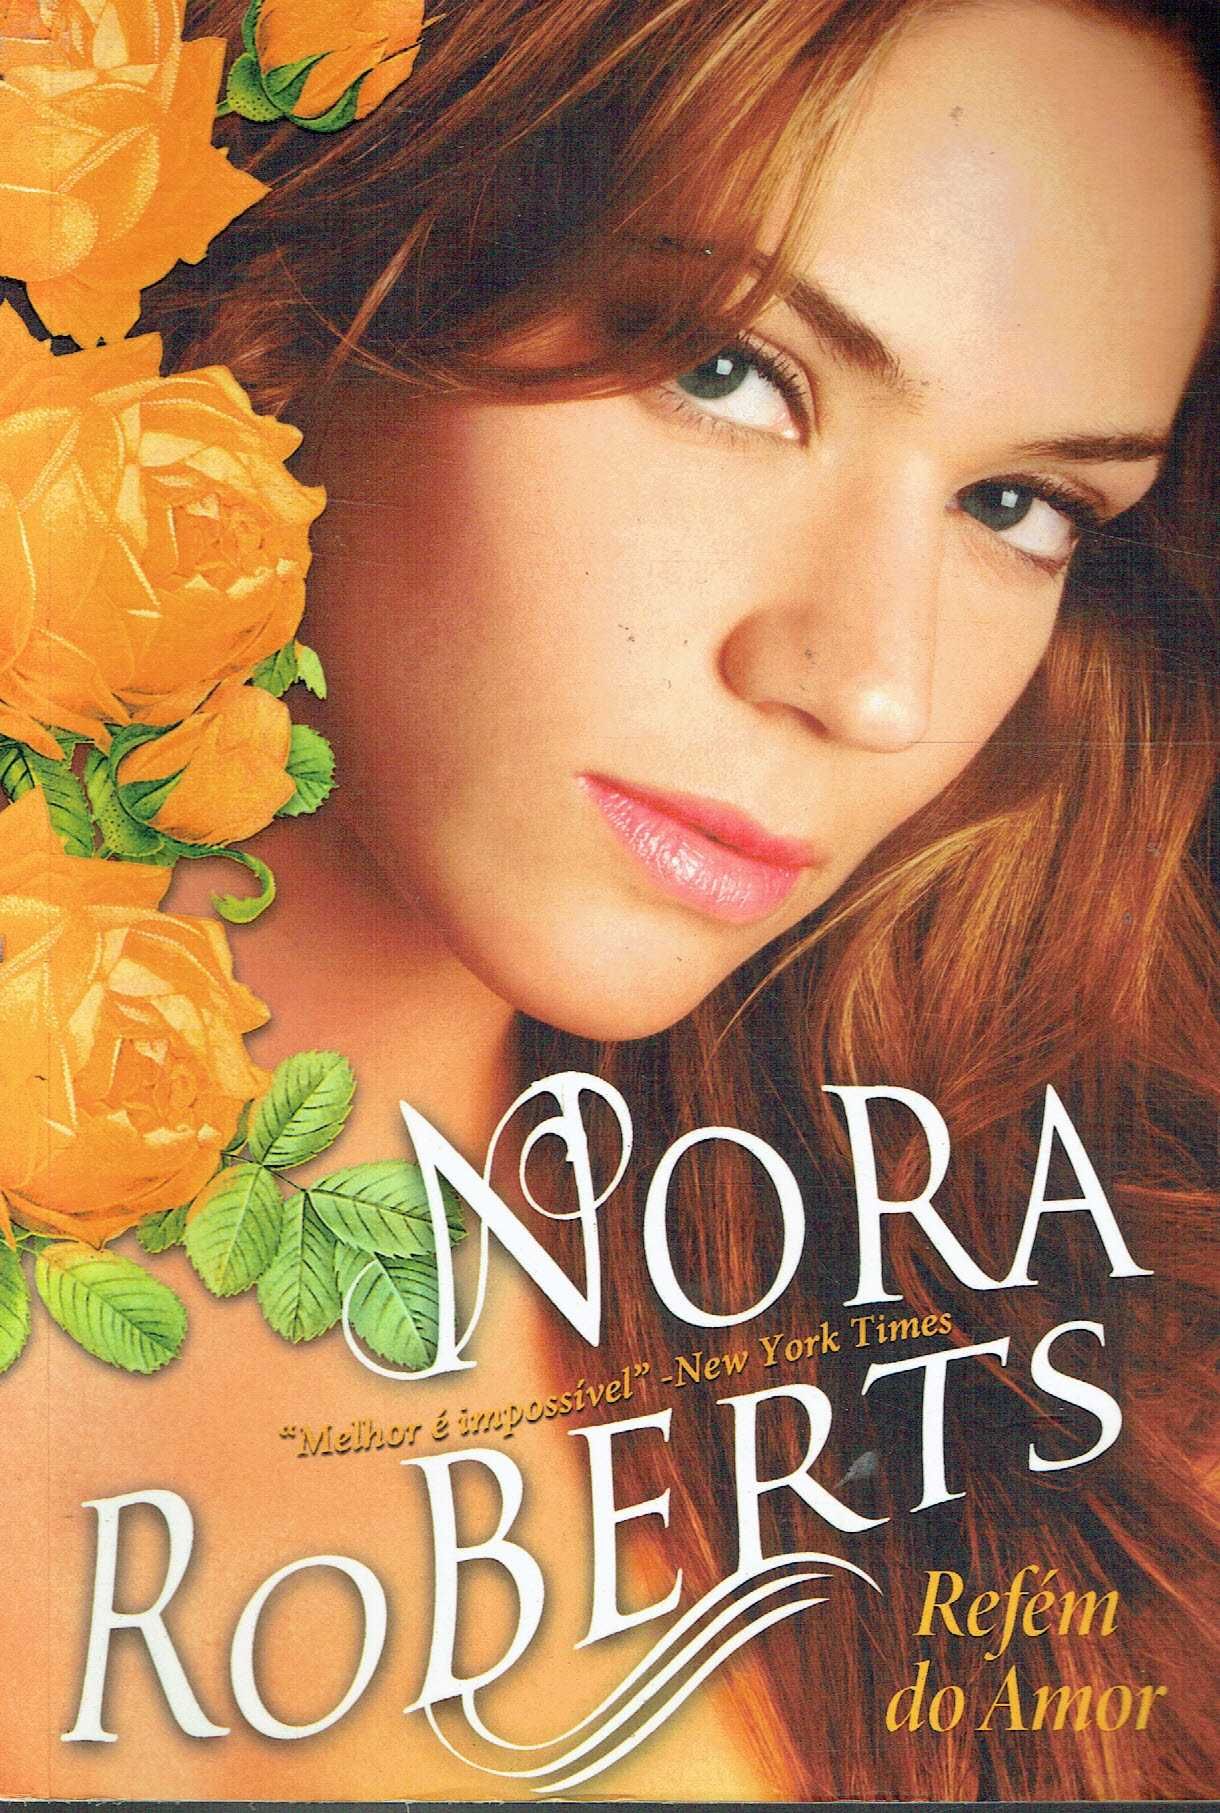 4143

Refém do Amor
de Nora Roberts